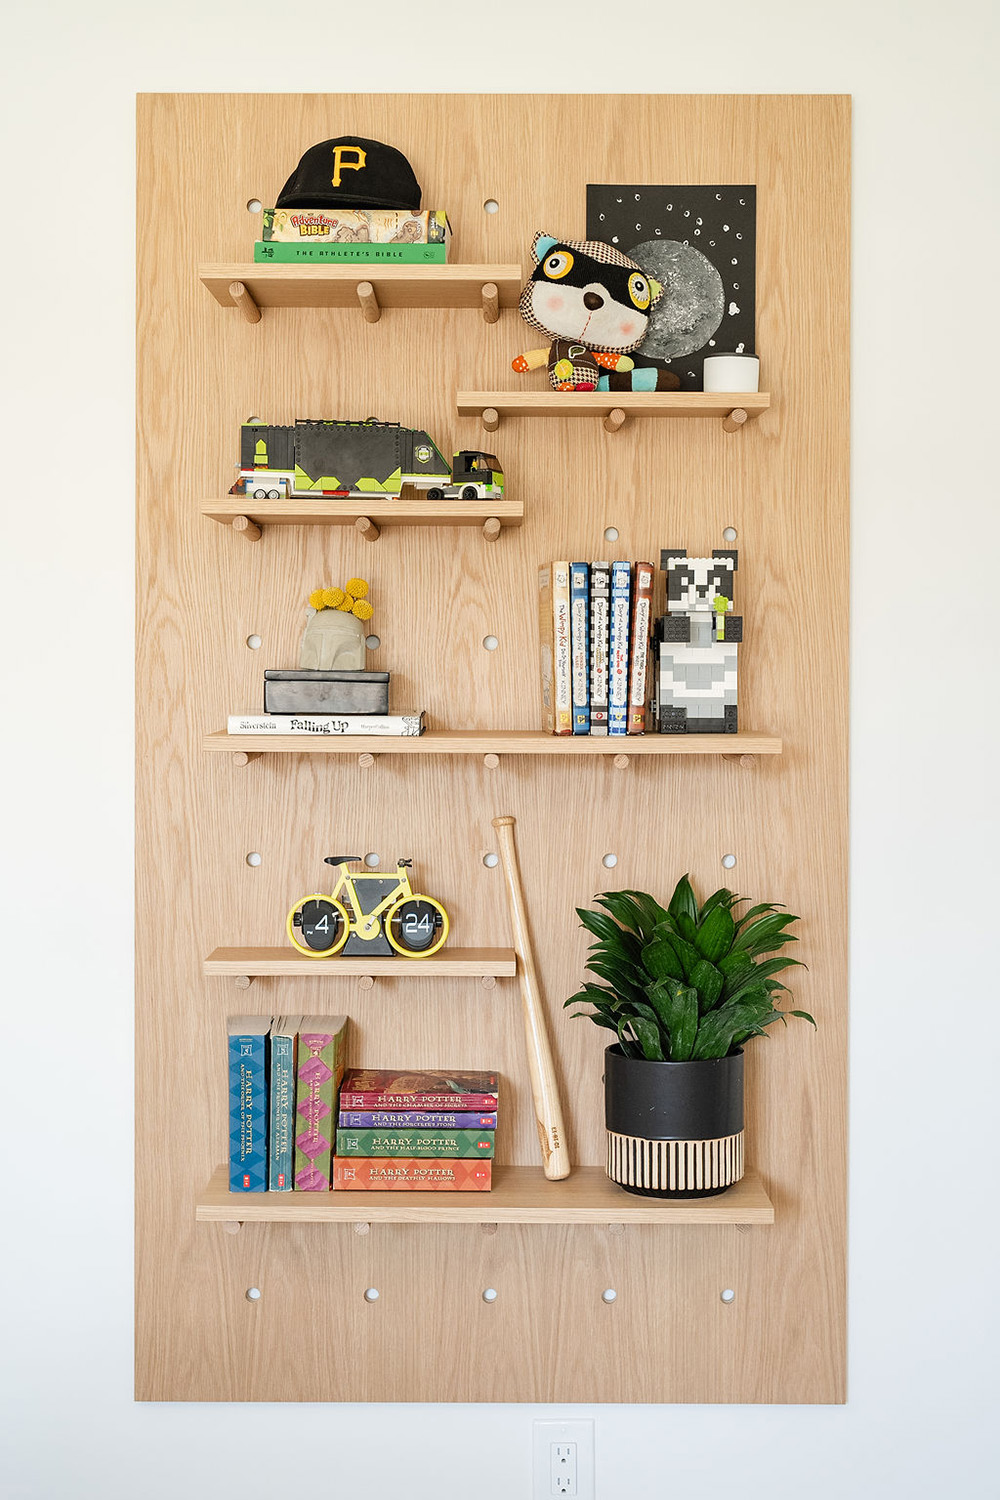 Childrens accessory shelf with decor